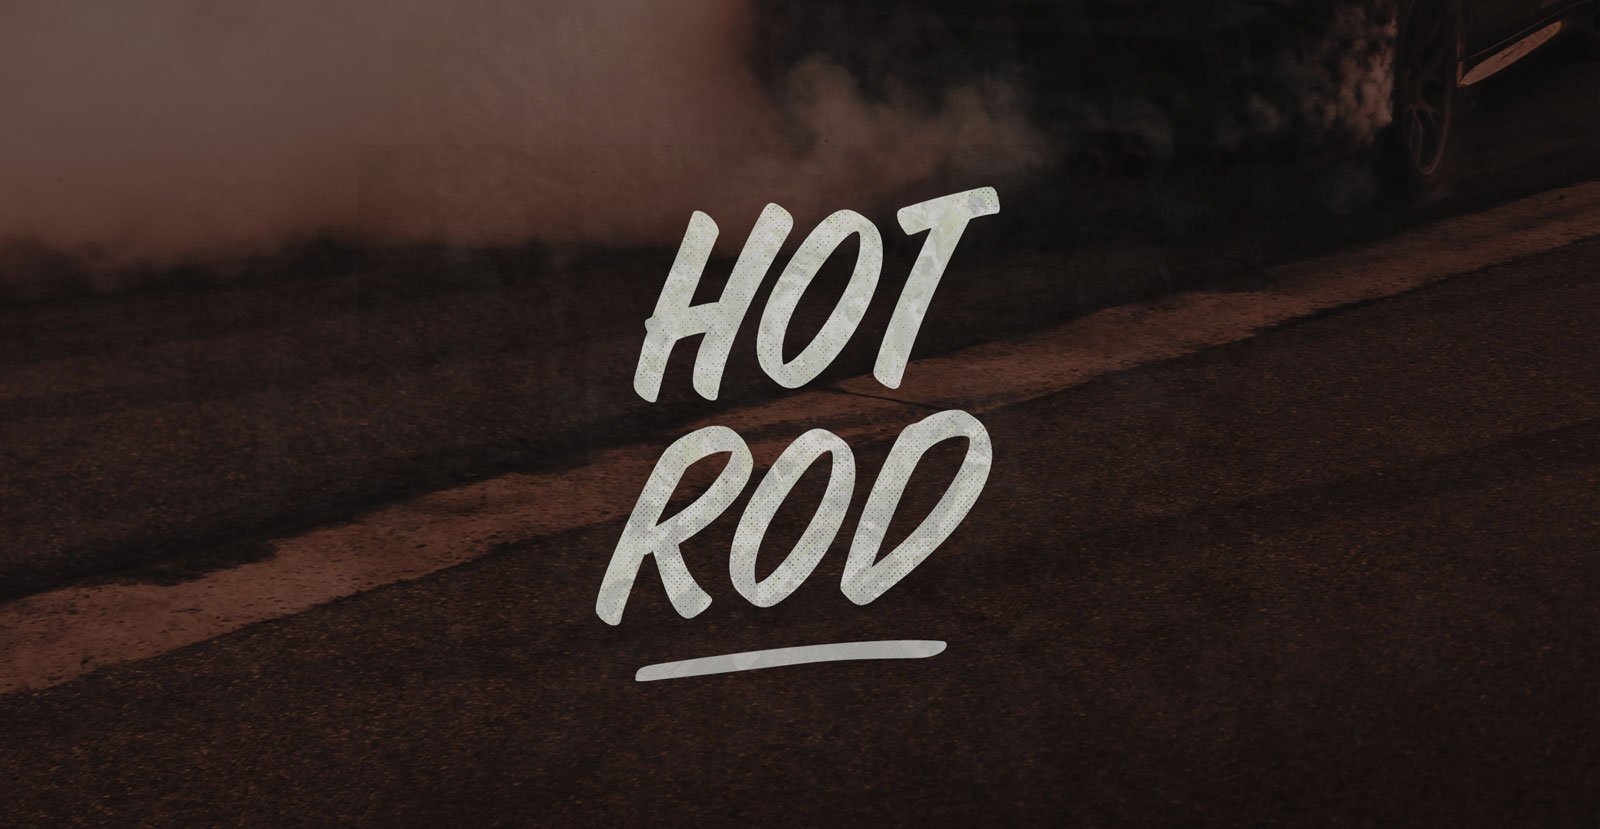 hot rod style font